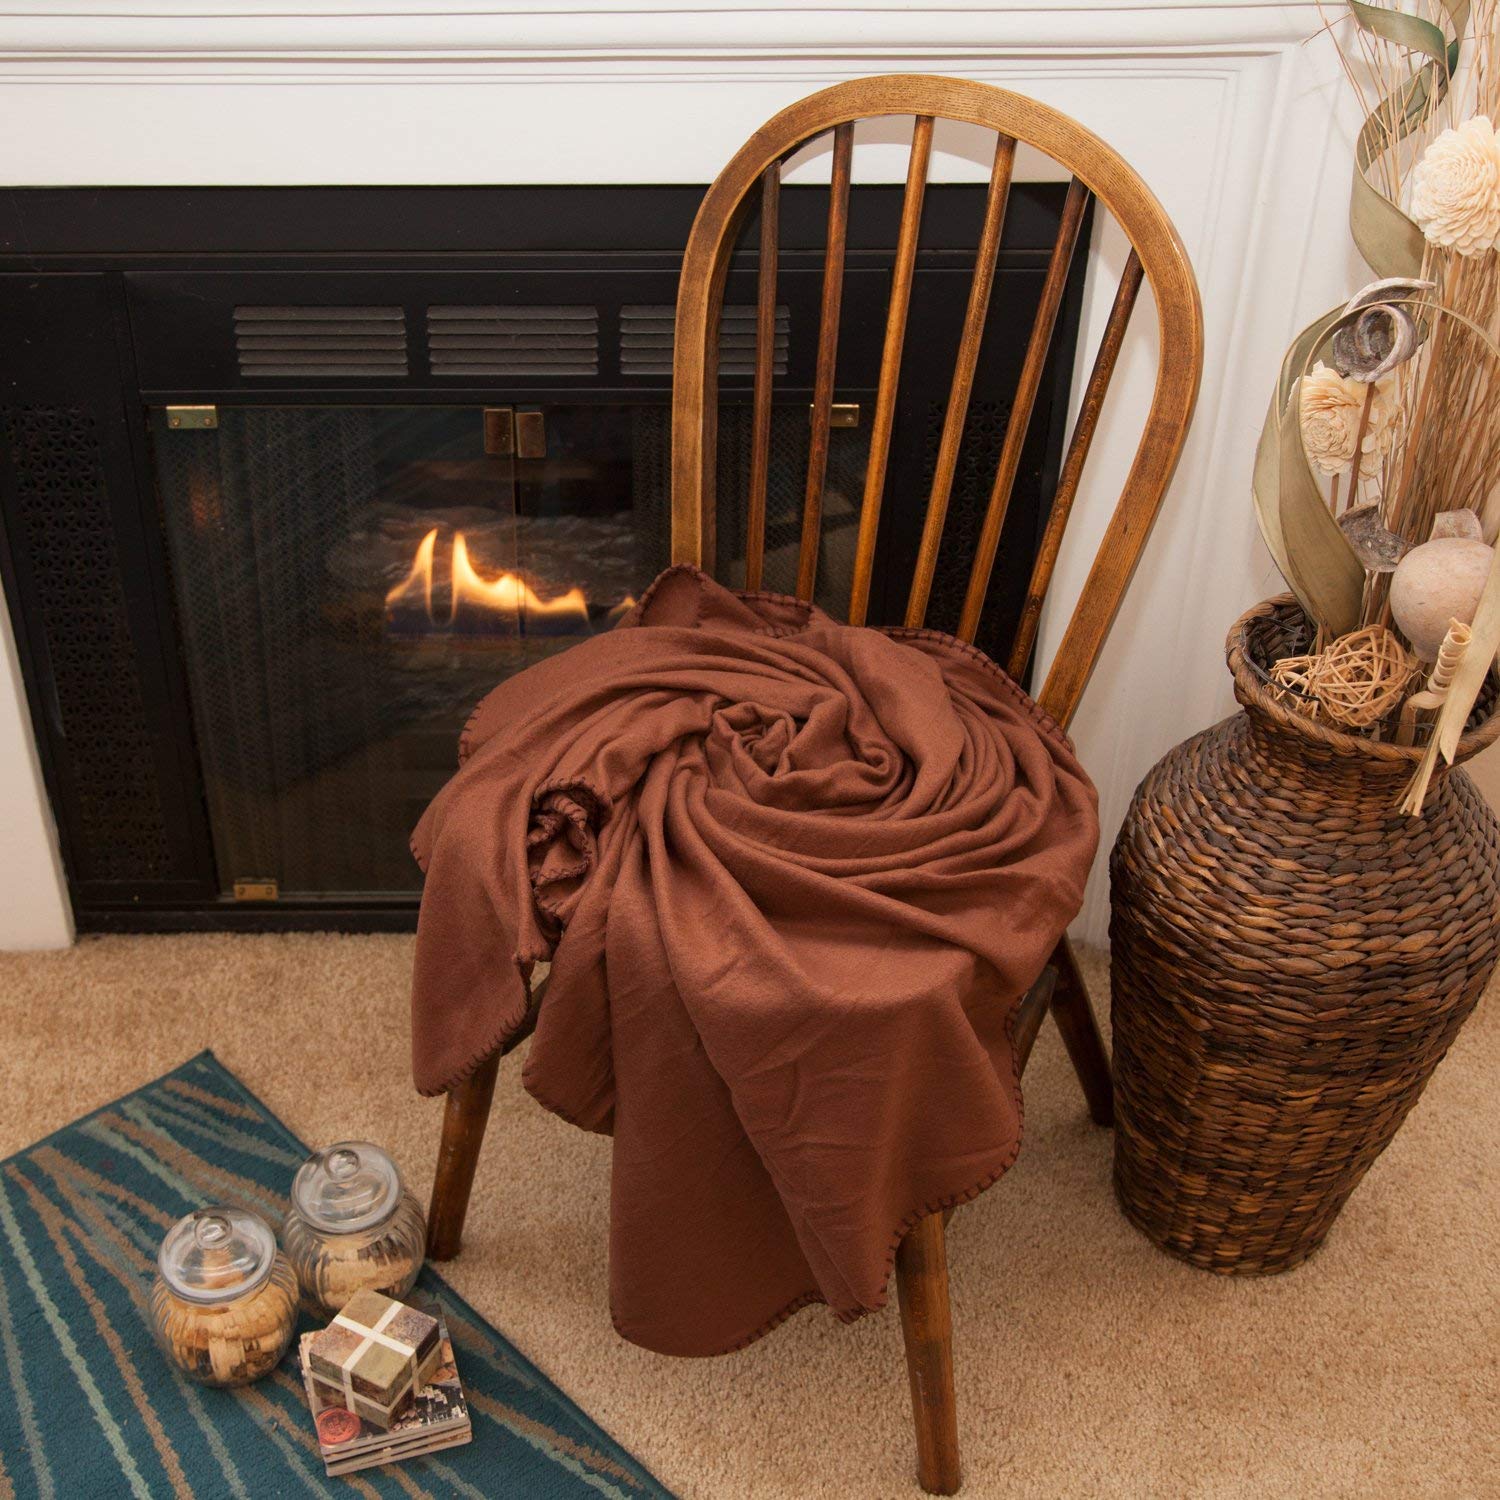 Imperial Home Cozy 50 X 60 Fleece Throw Blanket (Brown)